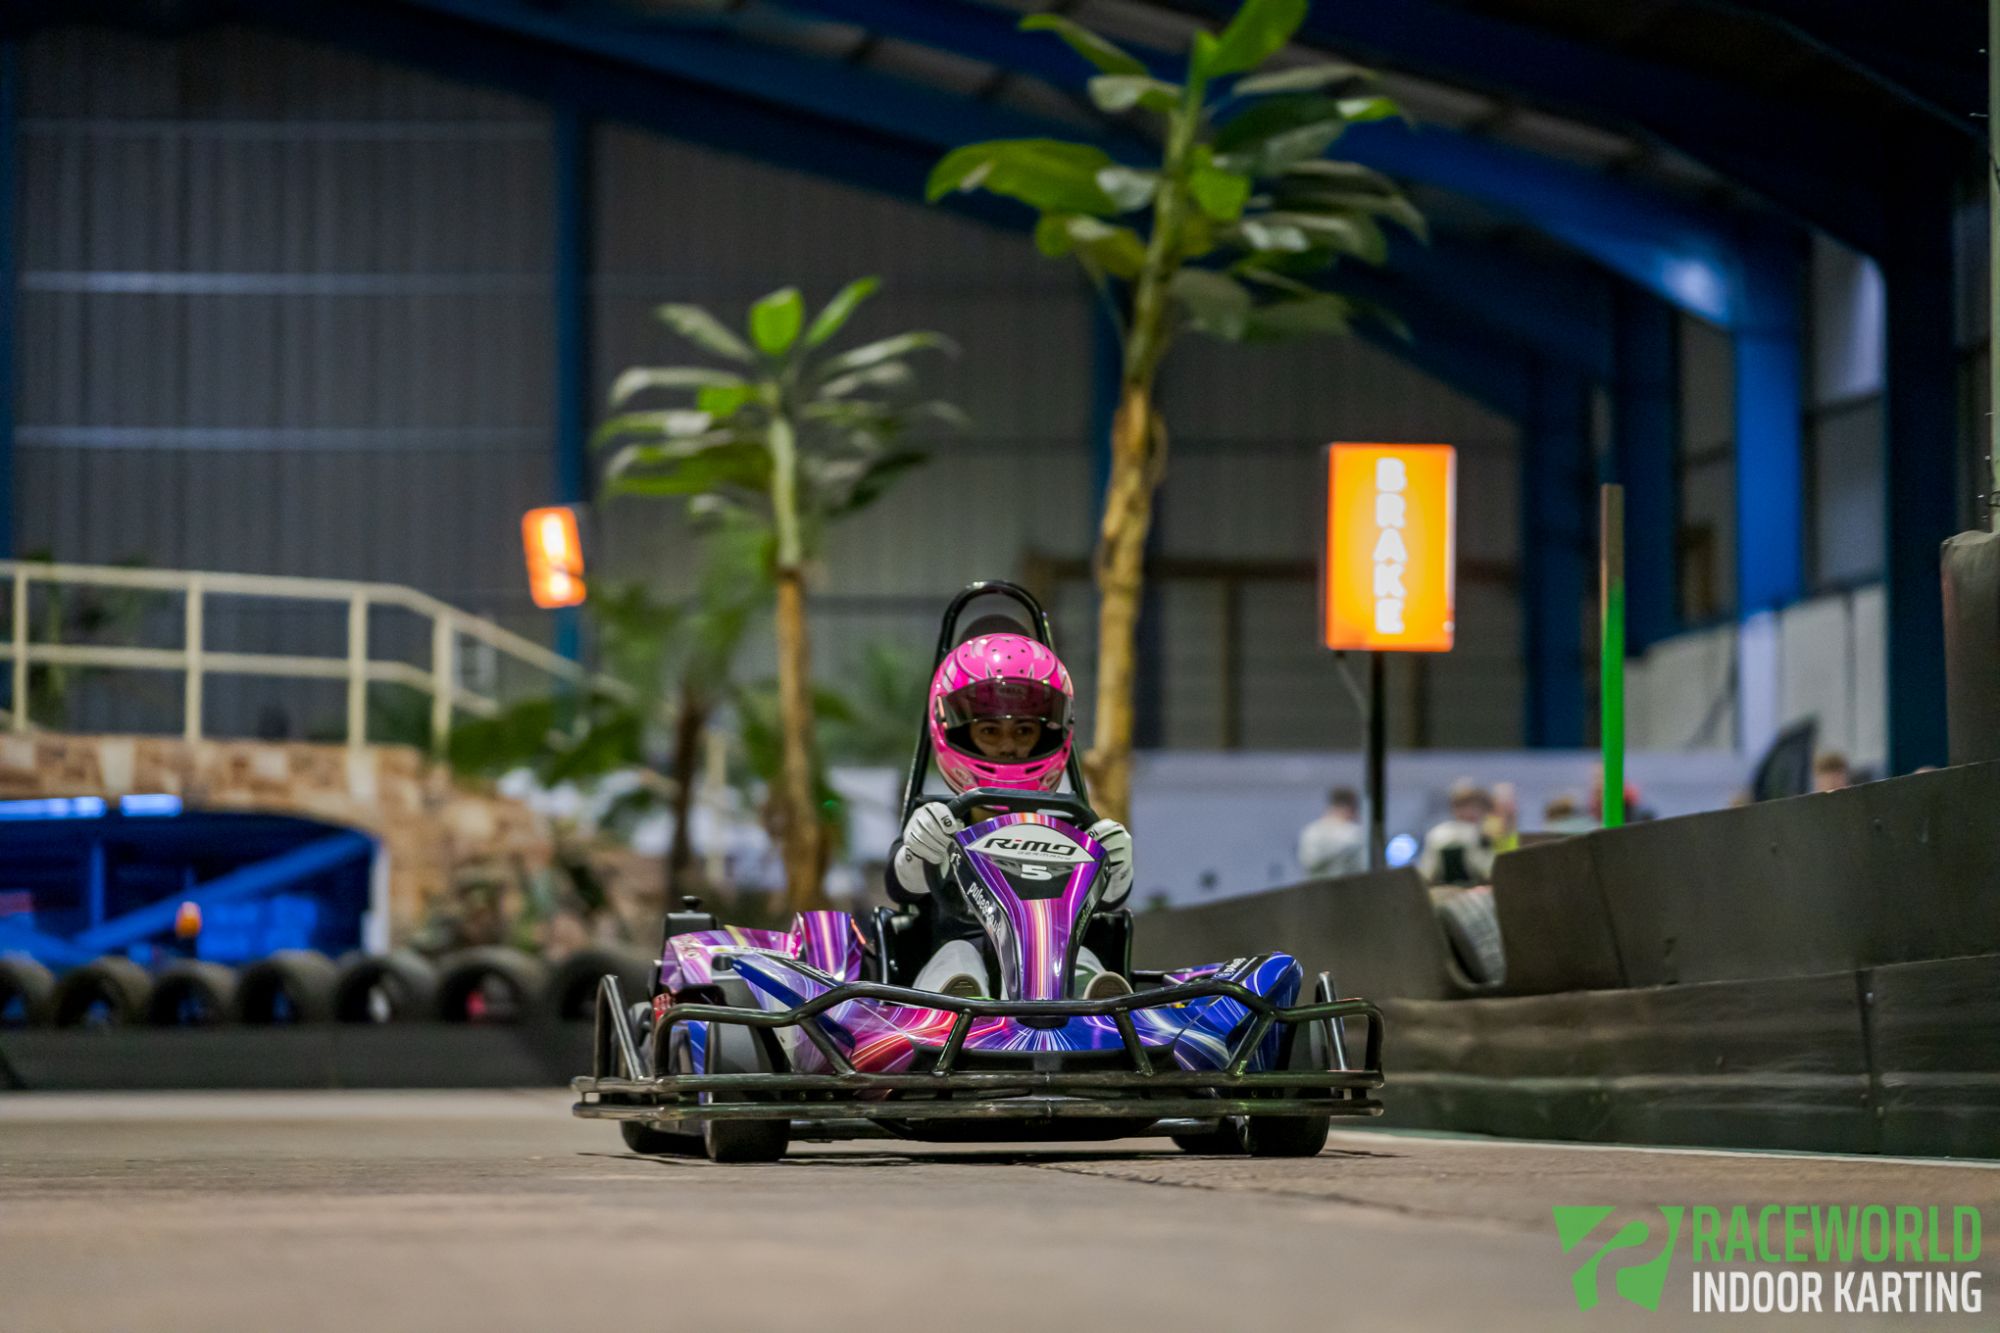 Junior Kart Club - Kart Racing on an indoor track